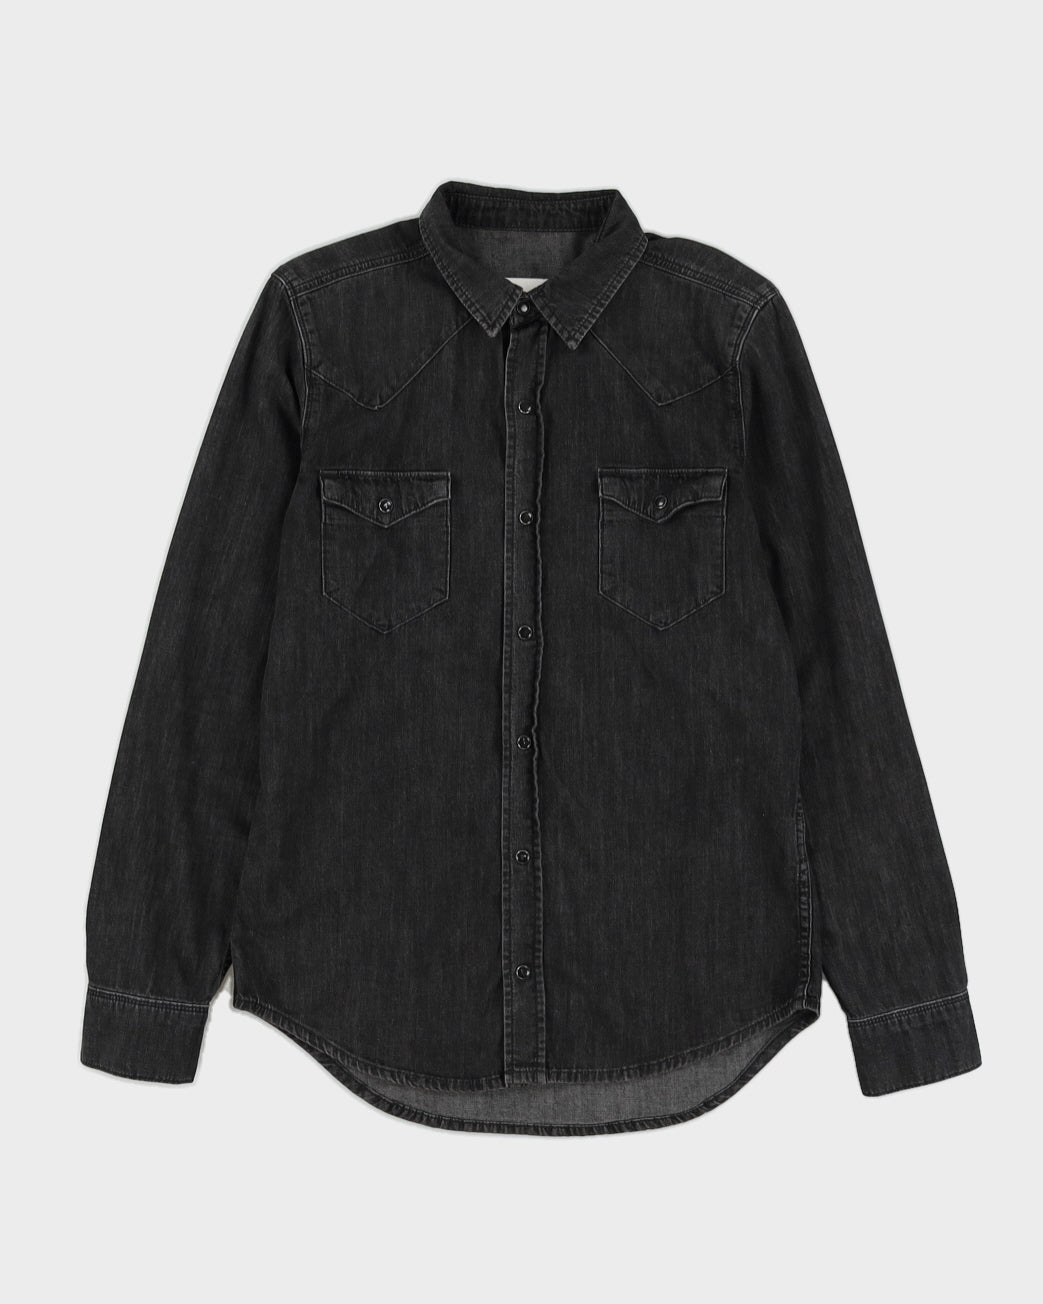 Sandro Paris Faded Black Denim Shirt - S